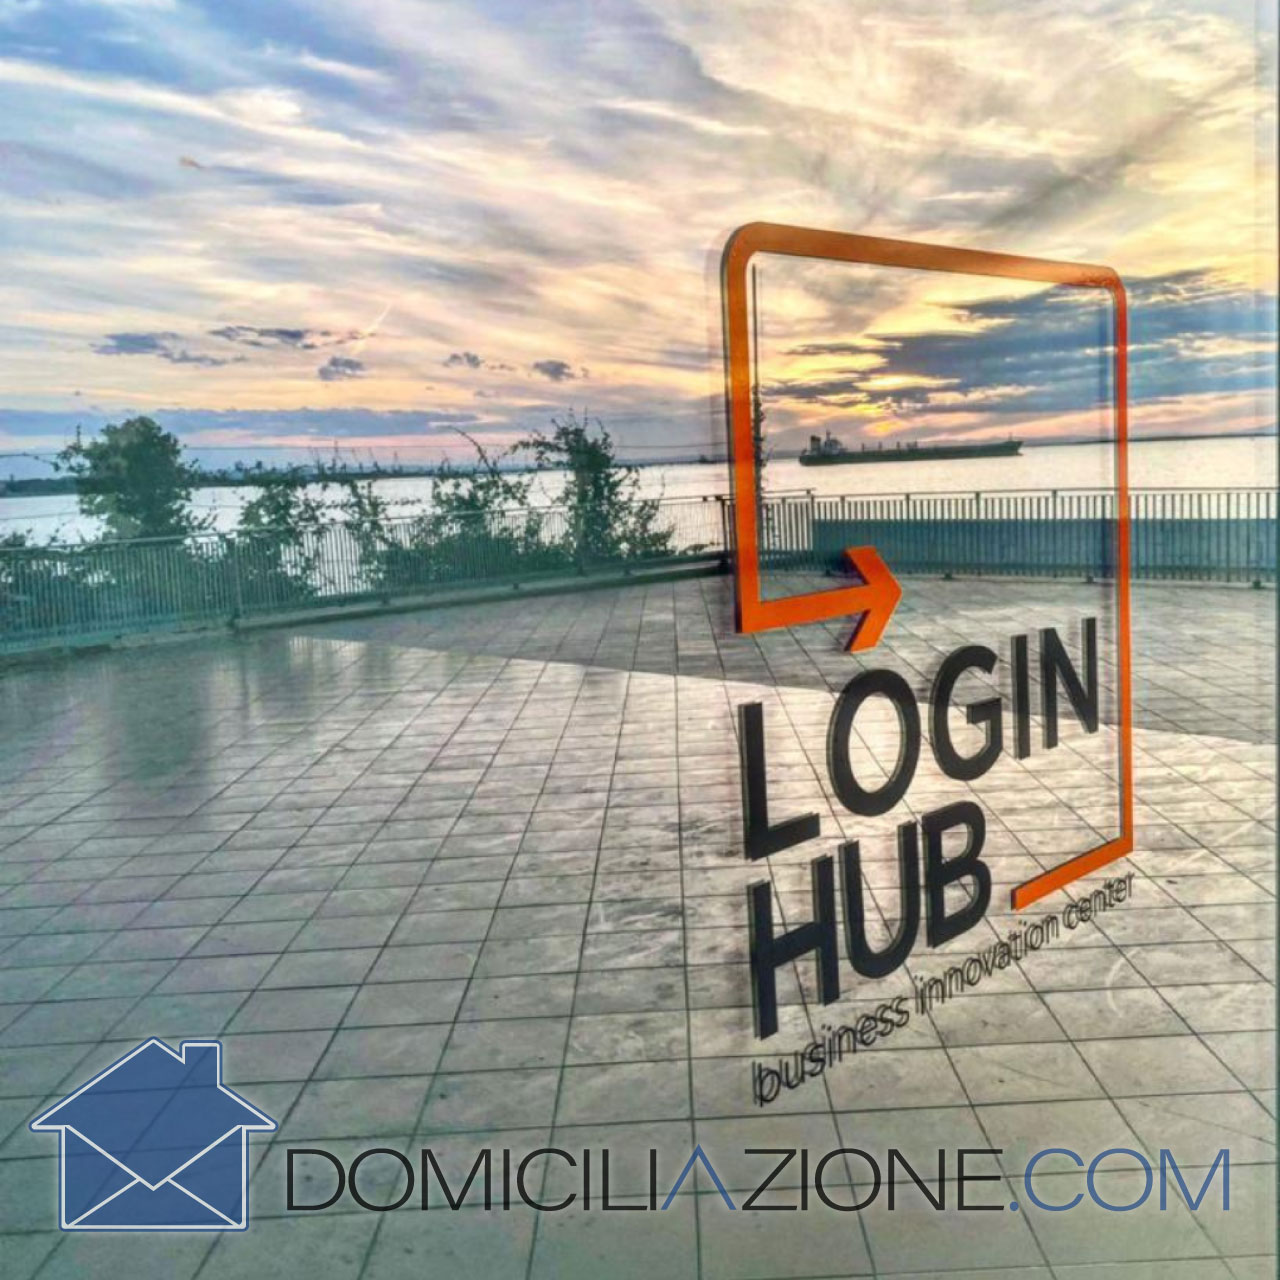 Coworking Login Hub